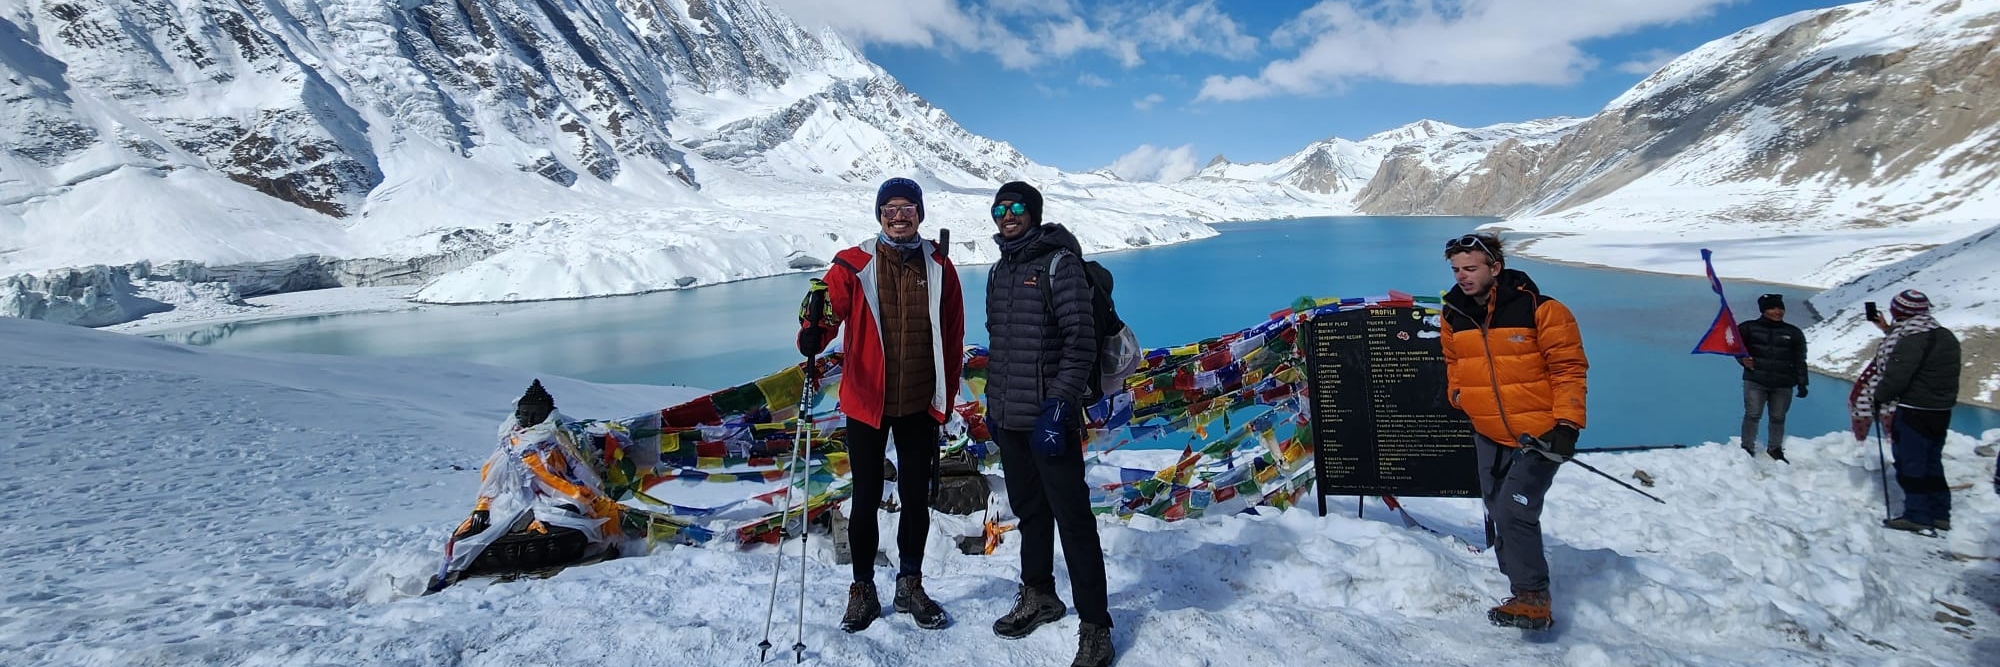 Adventure changeling Trek in nepal